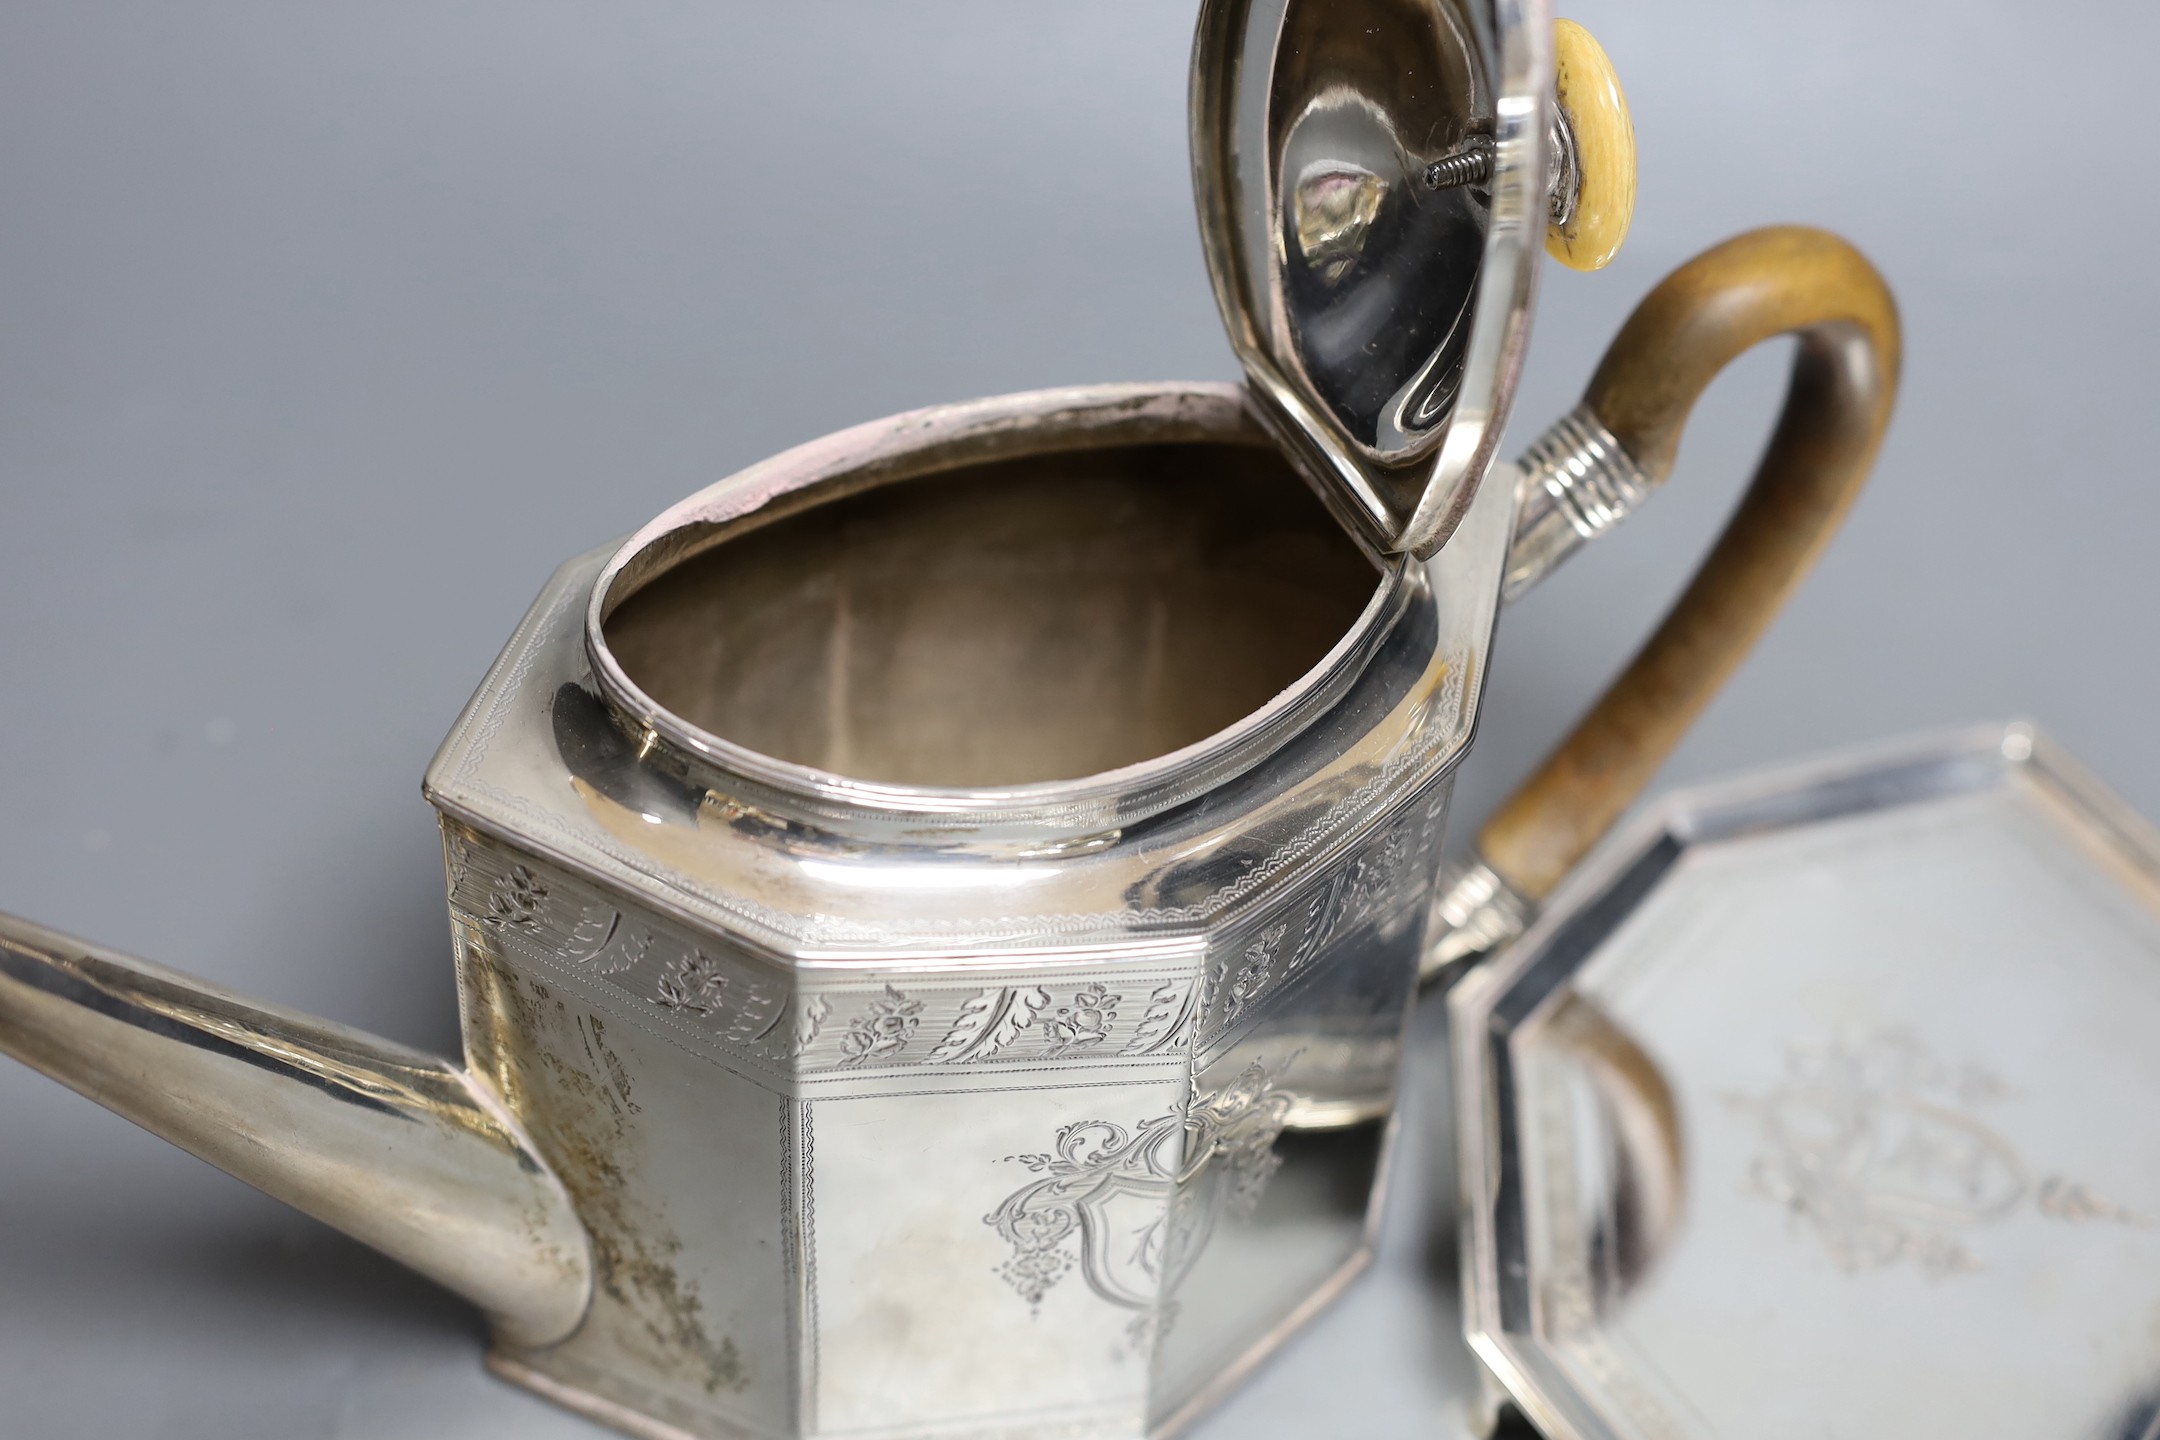 A George III silver octagonal teapot on matching stand, John Robins, London, 1795, stand length 19.6cm, gross weight 21.7oz.